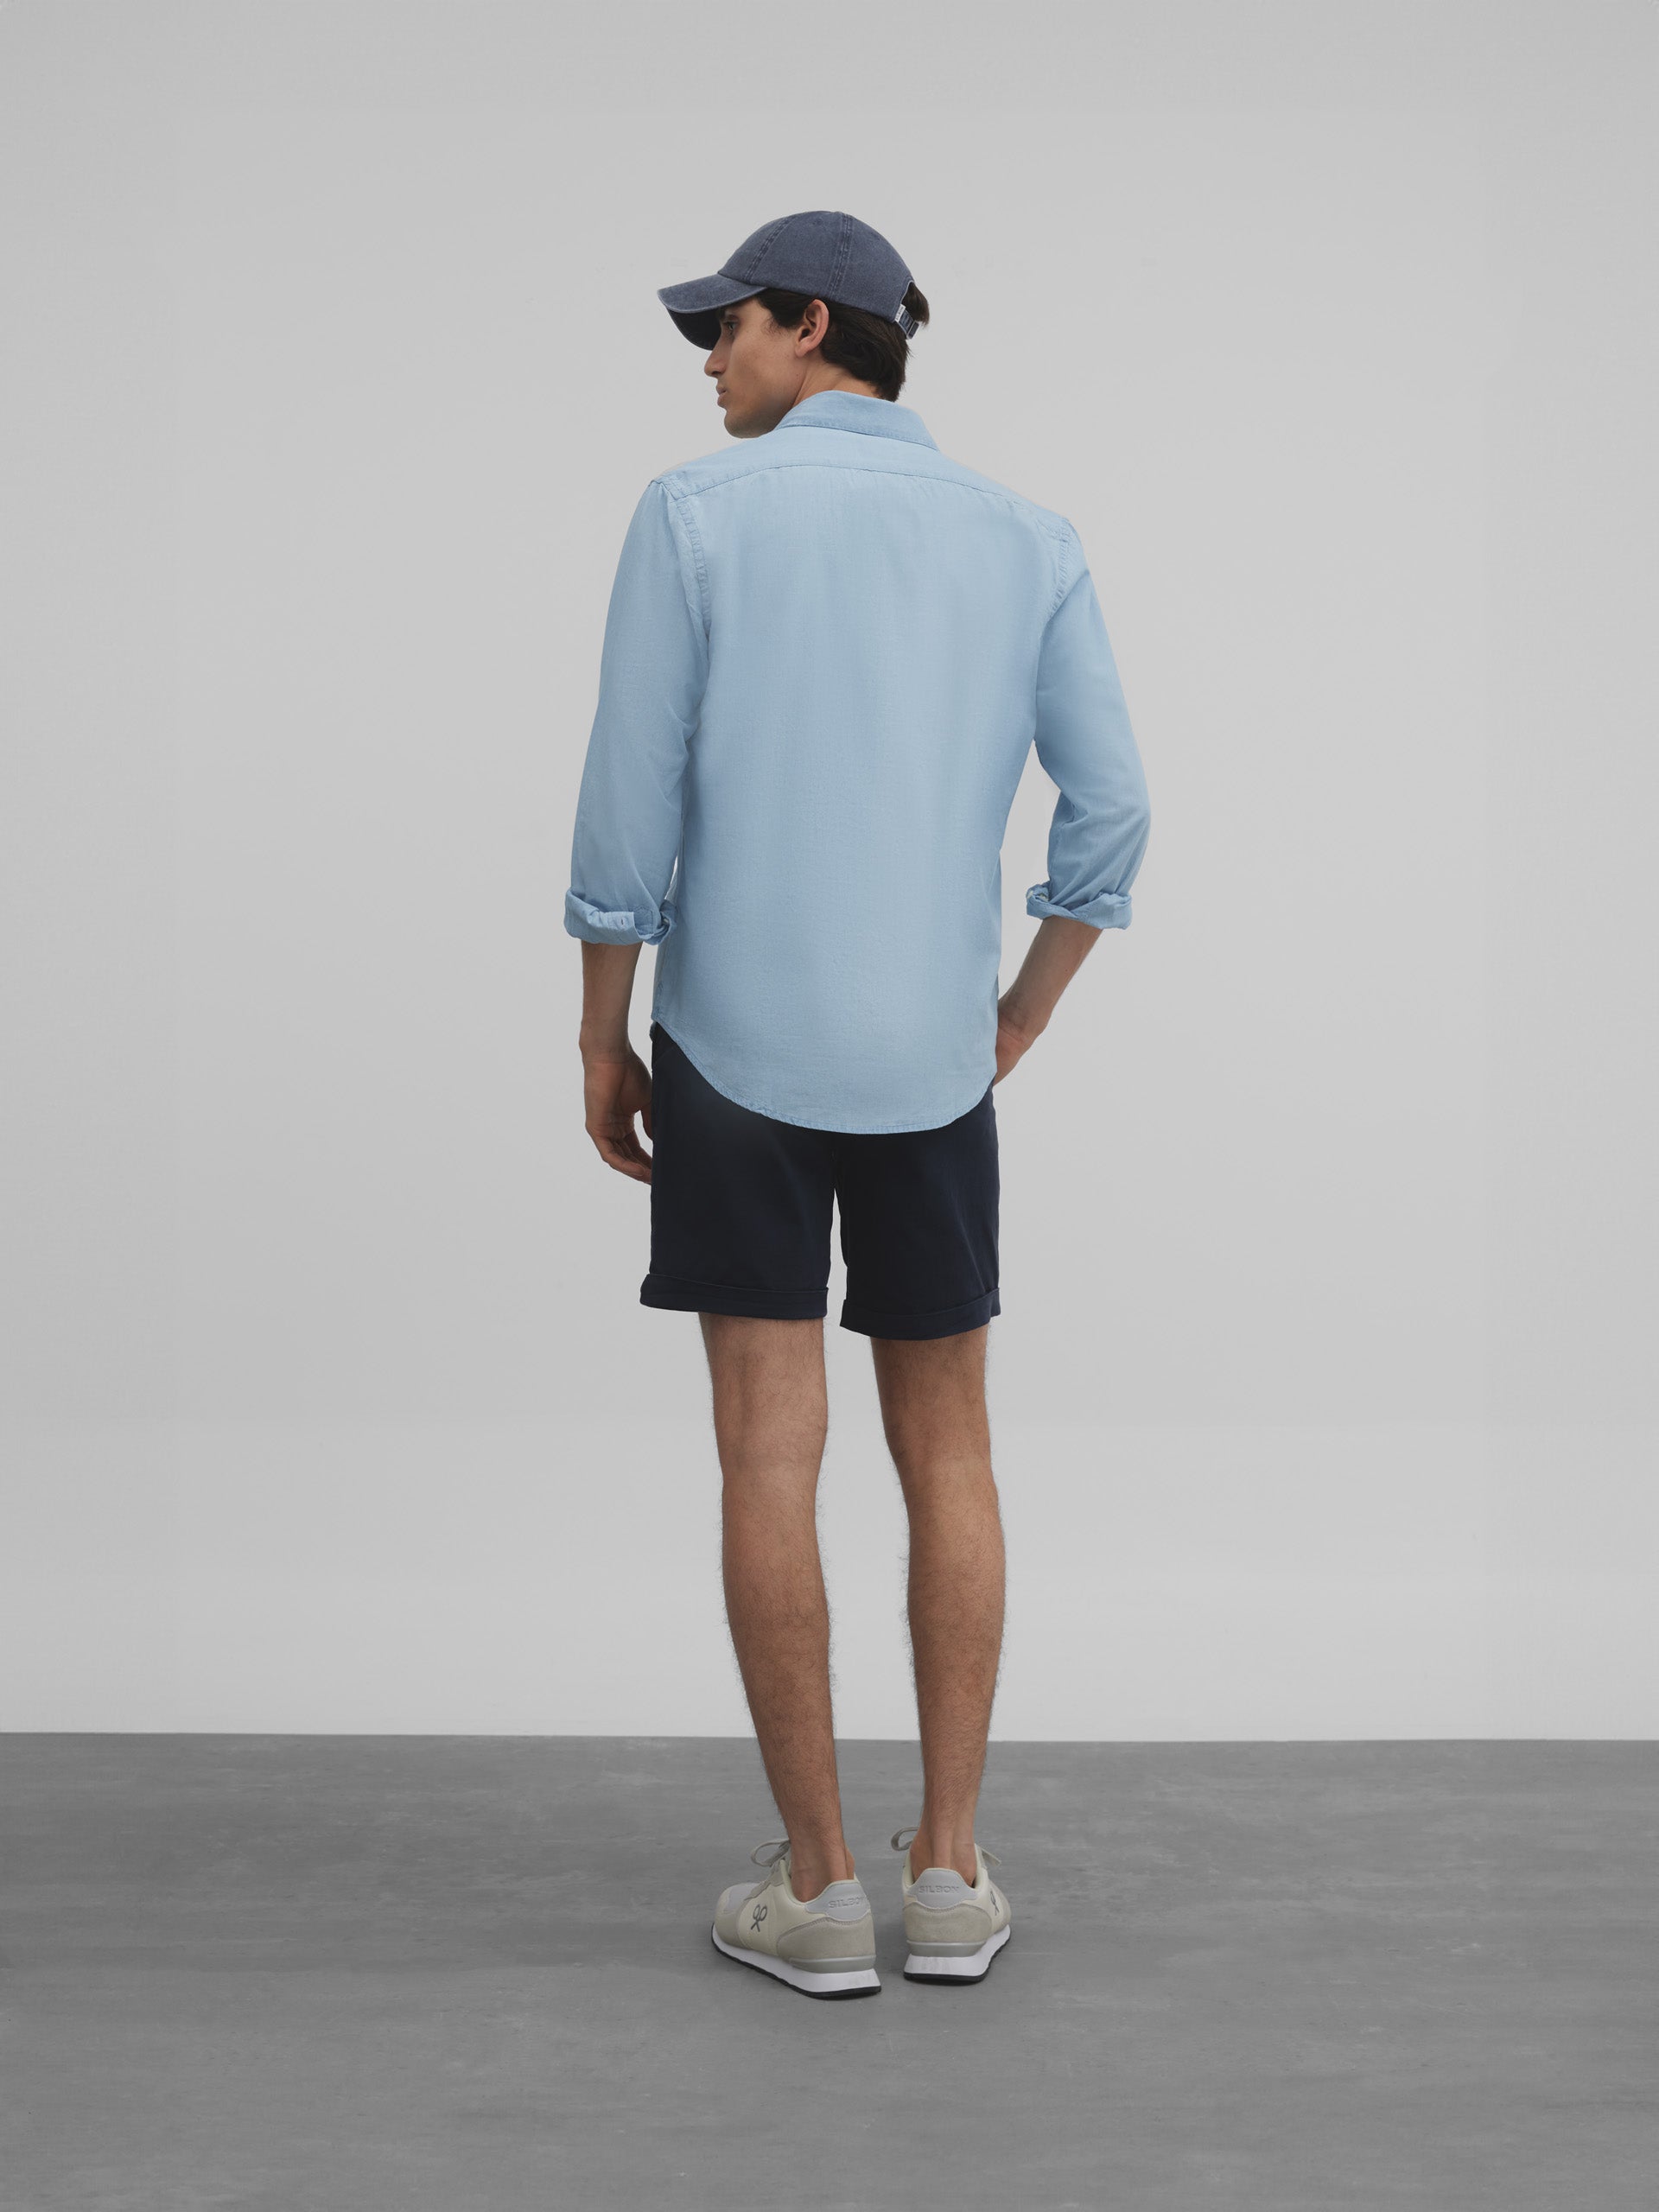 Sport denim shirt with light blue pockets